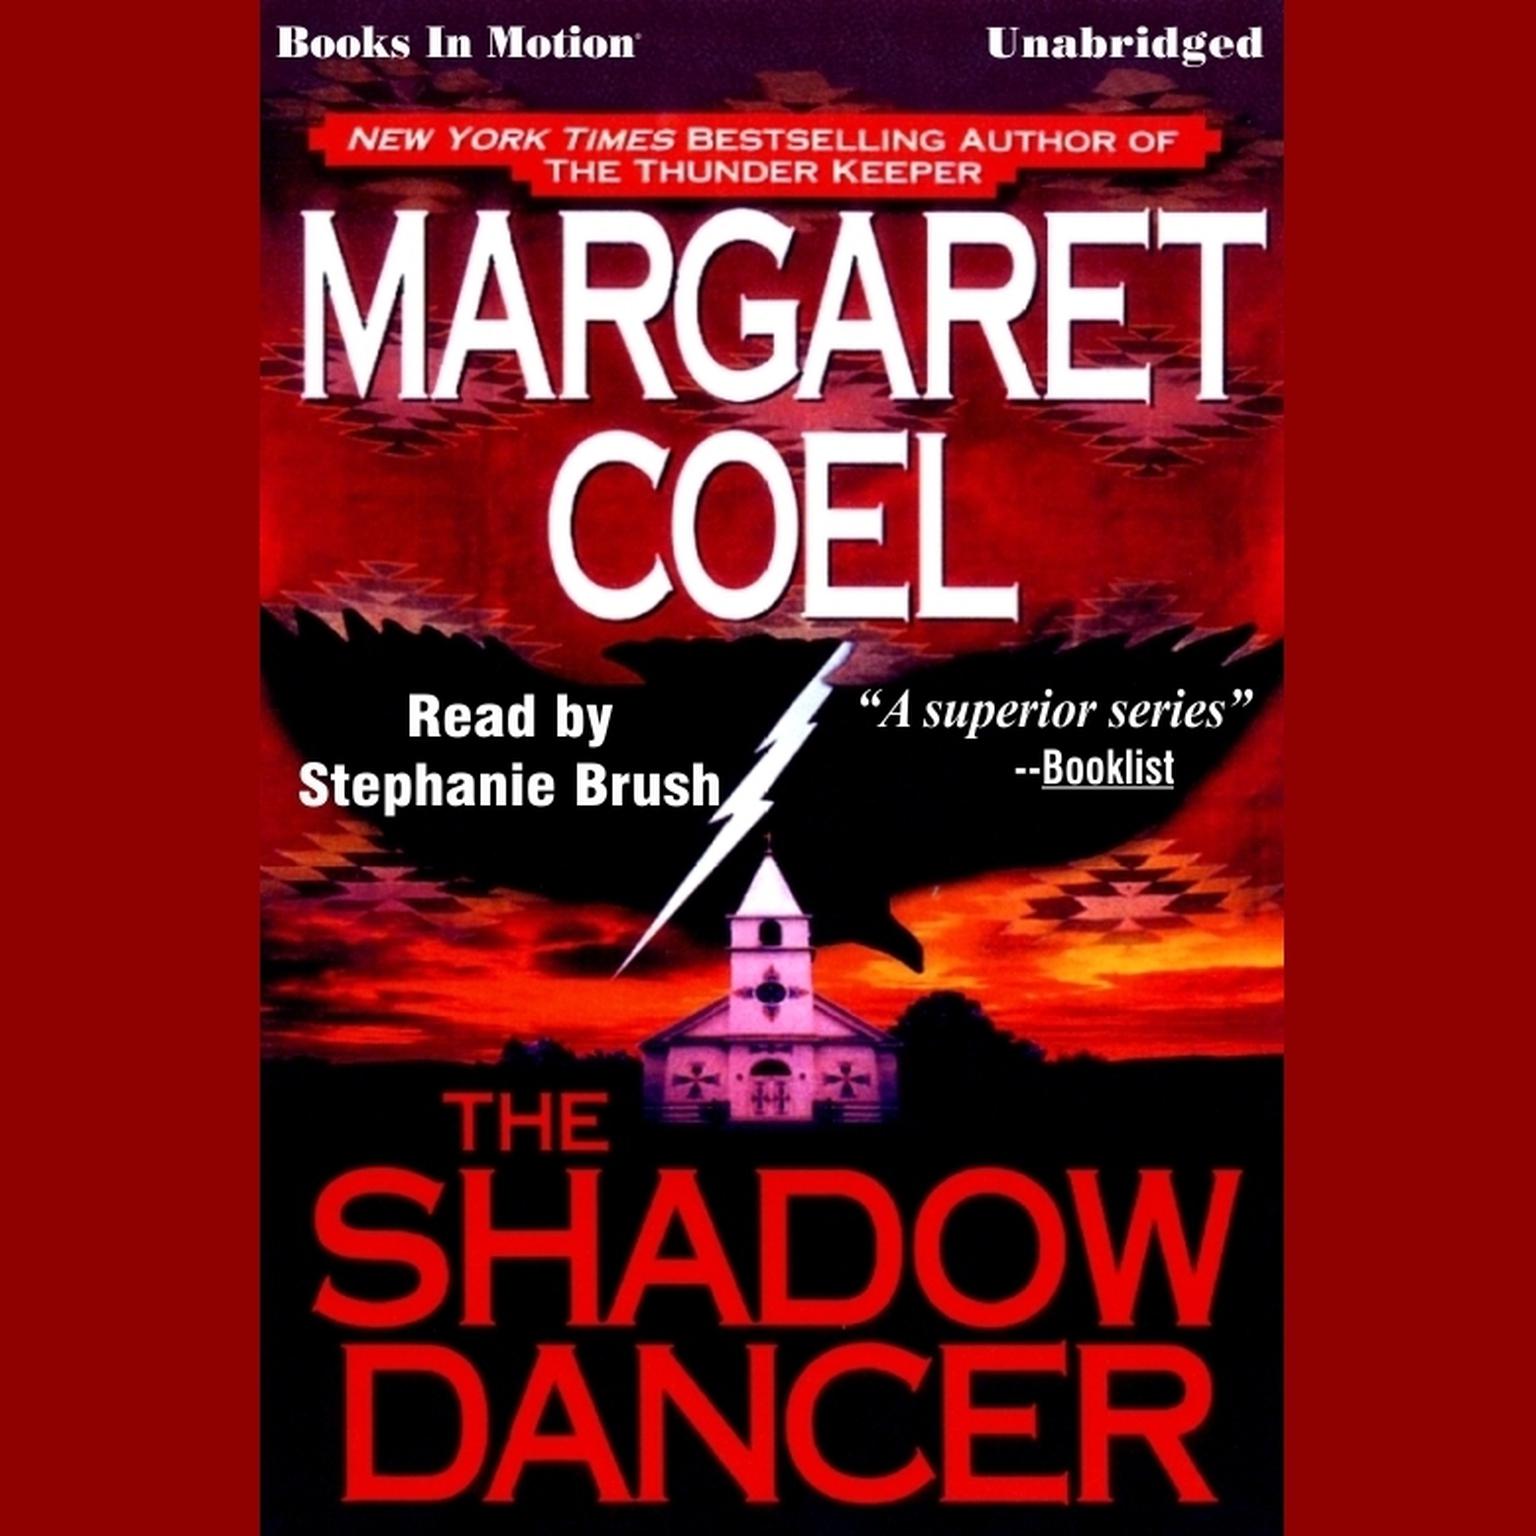 The Shadow Dancer Audiobook, by Margaret Coel